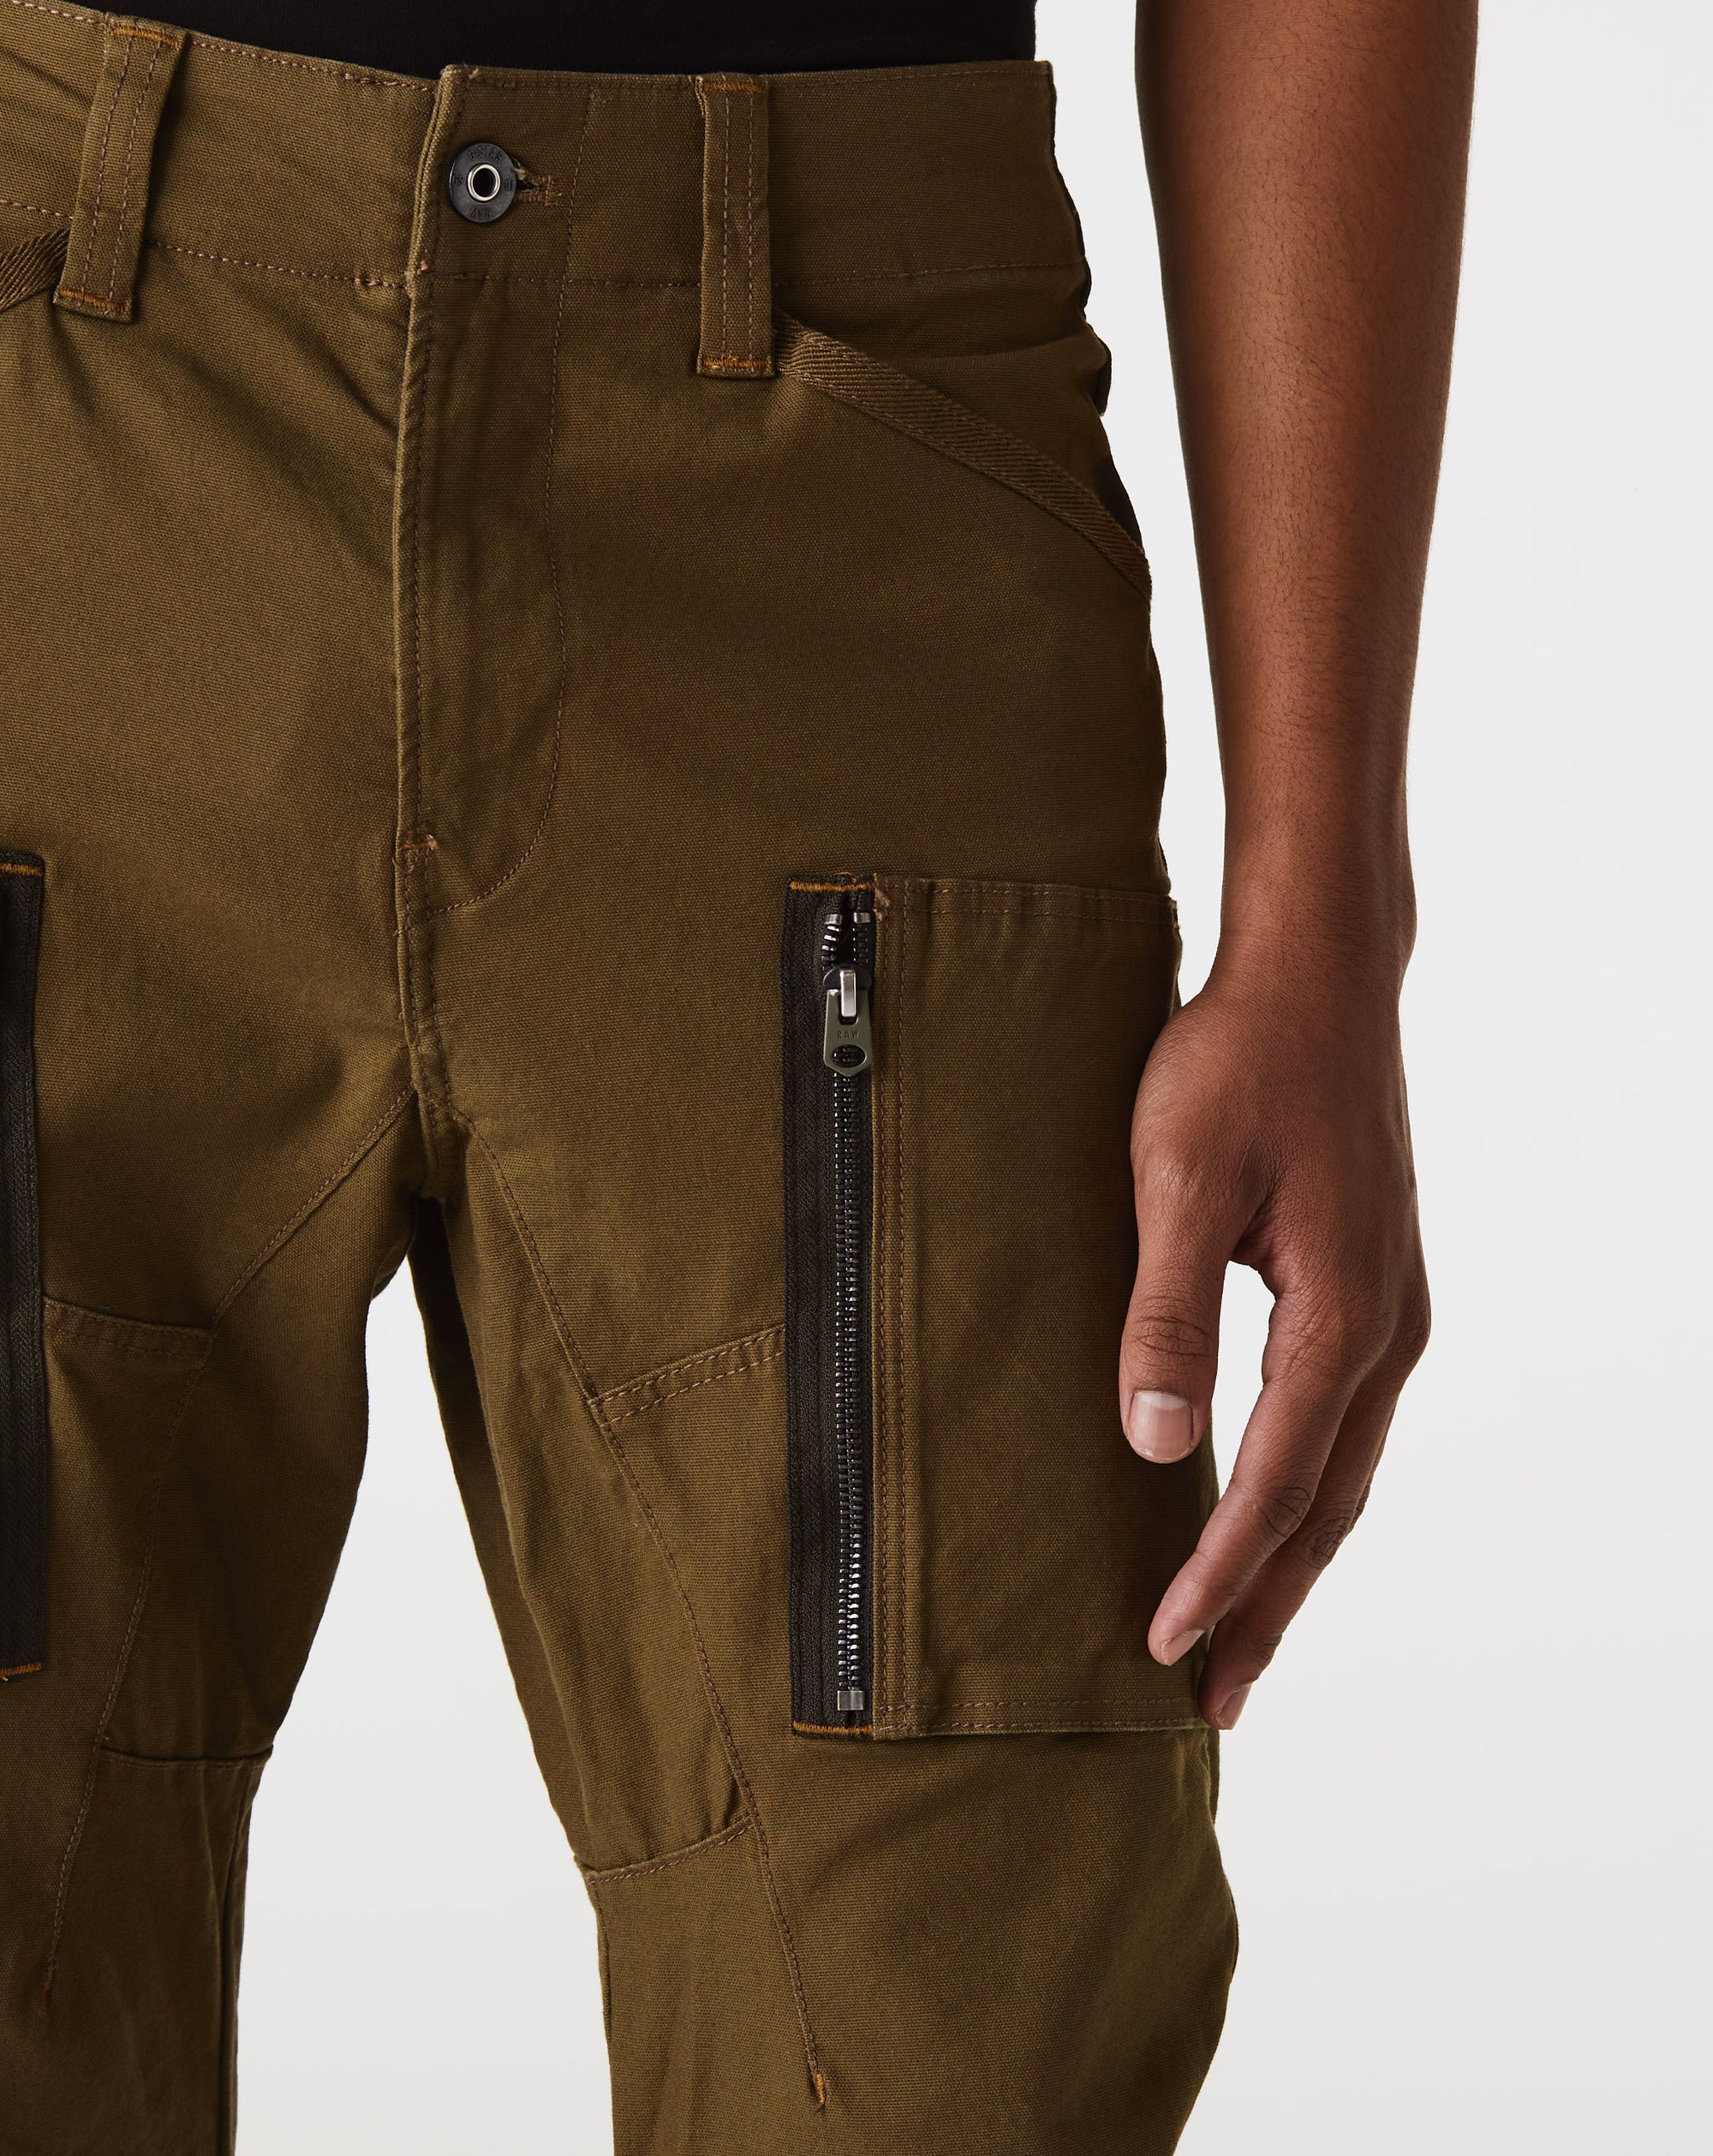 G-Star RAW Zip Pocket 3D Skinny Cargo - Rule of Next Apparel